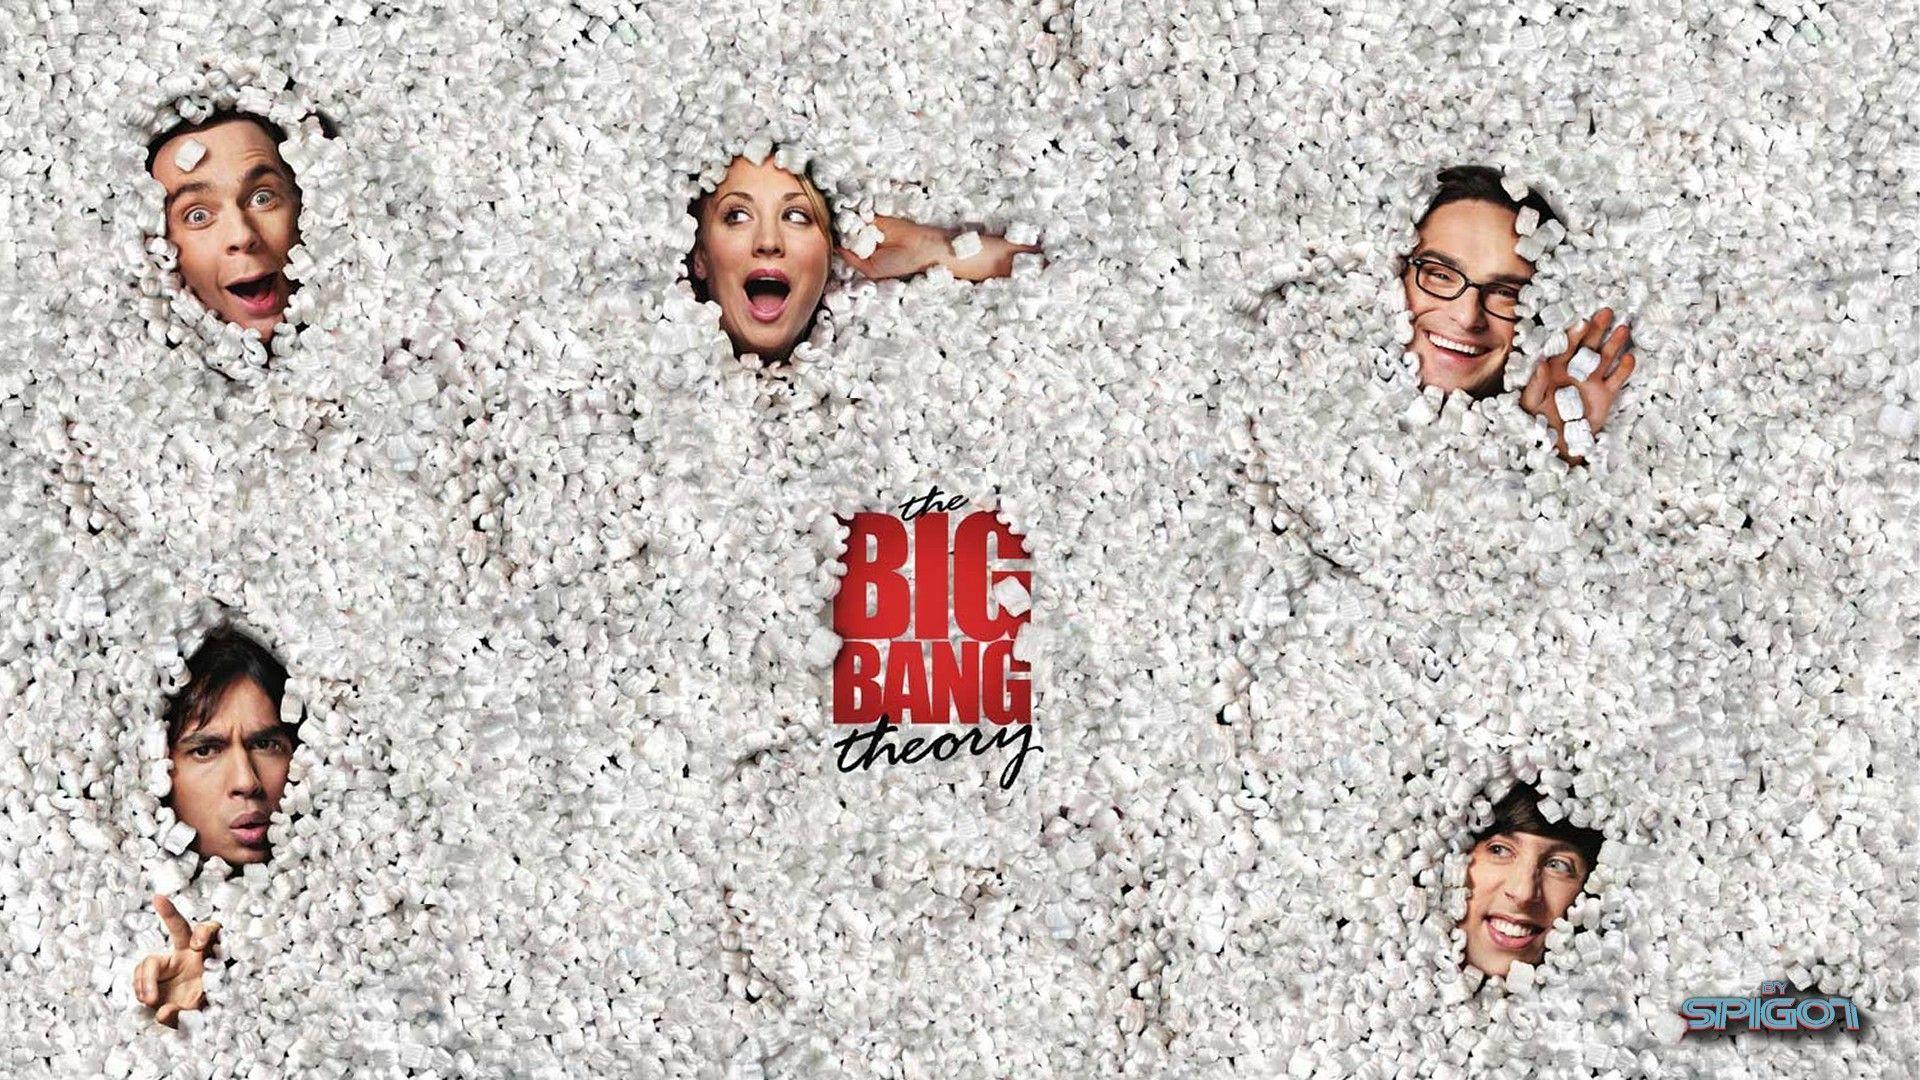 The Big Bang Theory Wallpaper. George Spigot&;s Blog